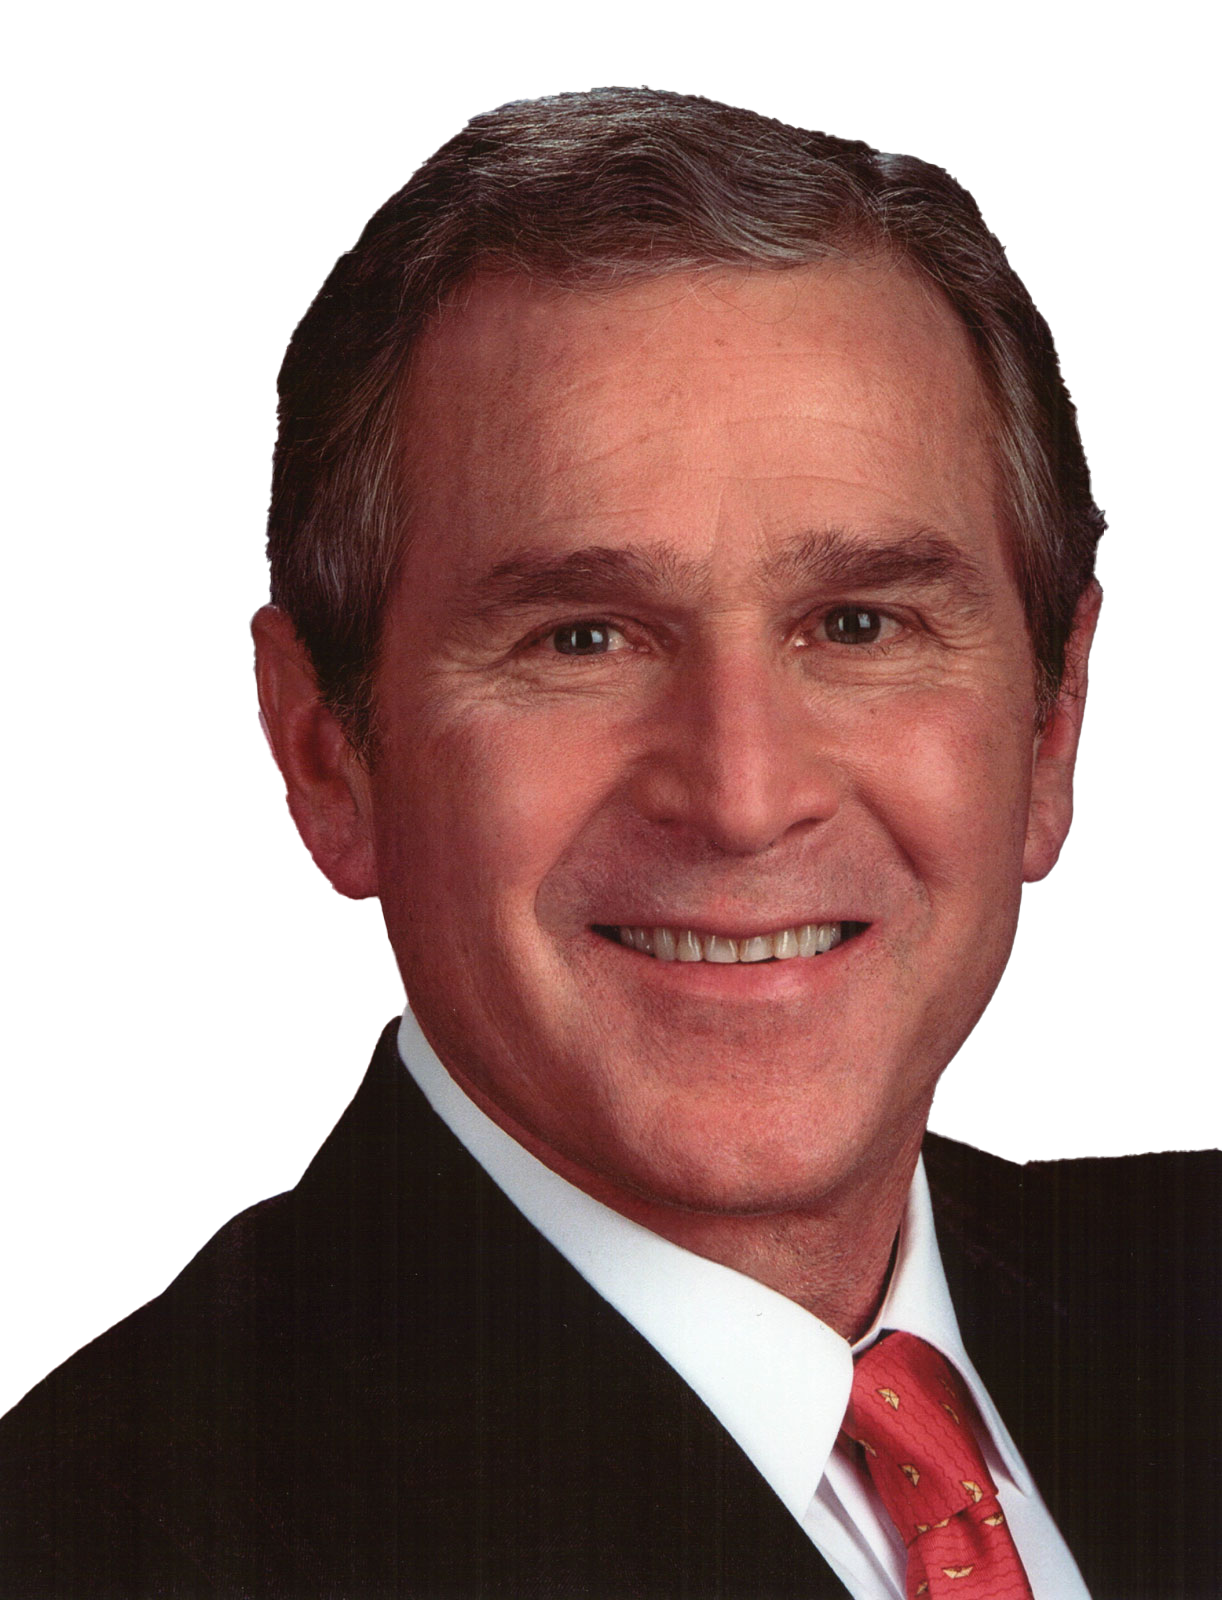 Джордж Буш PNG Images HD